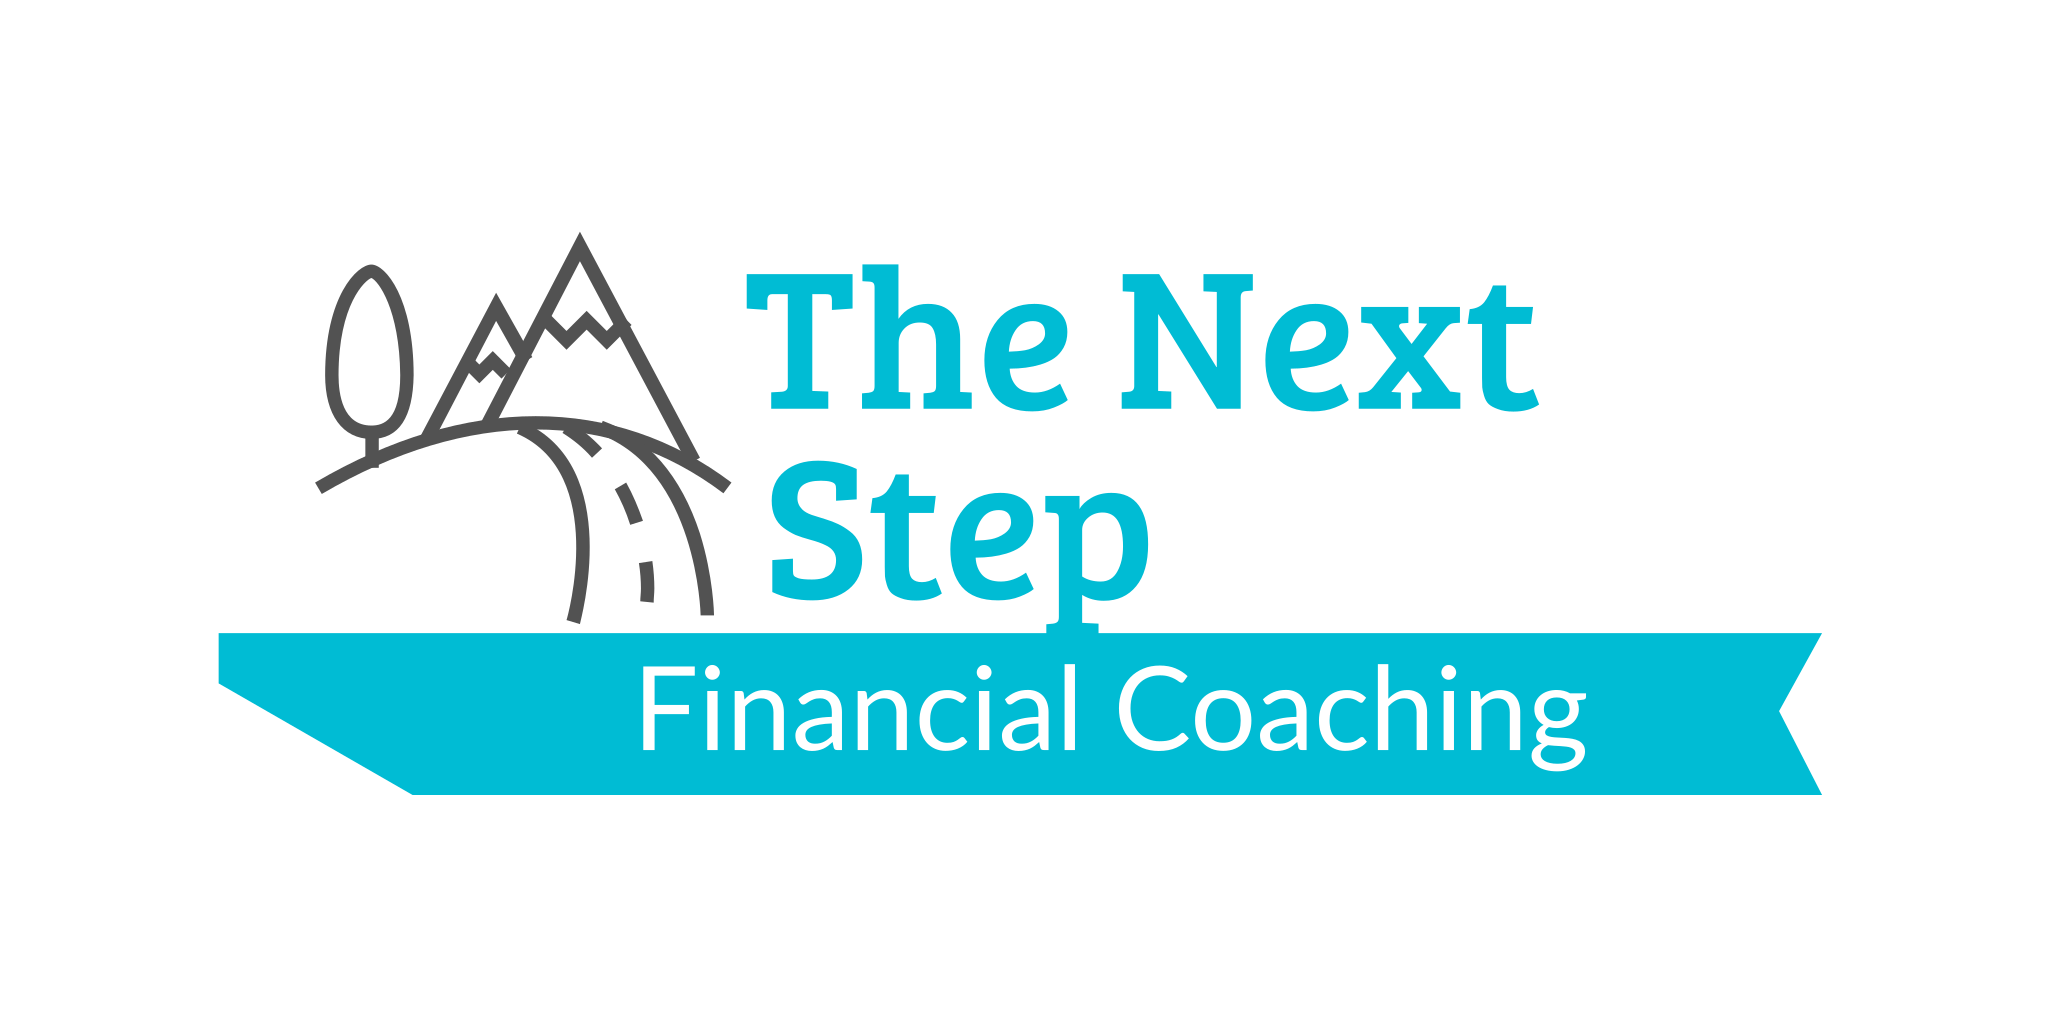 The Next Step Financial Coaching